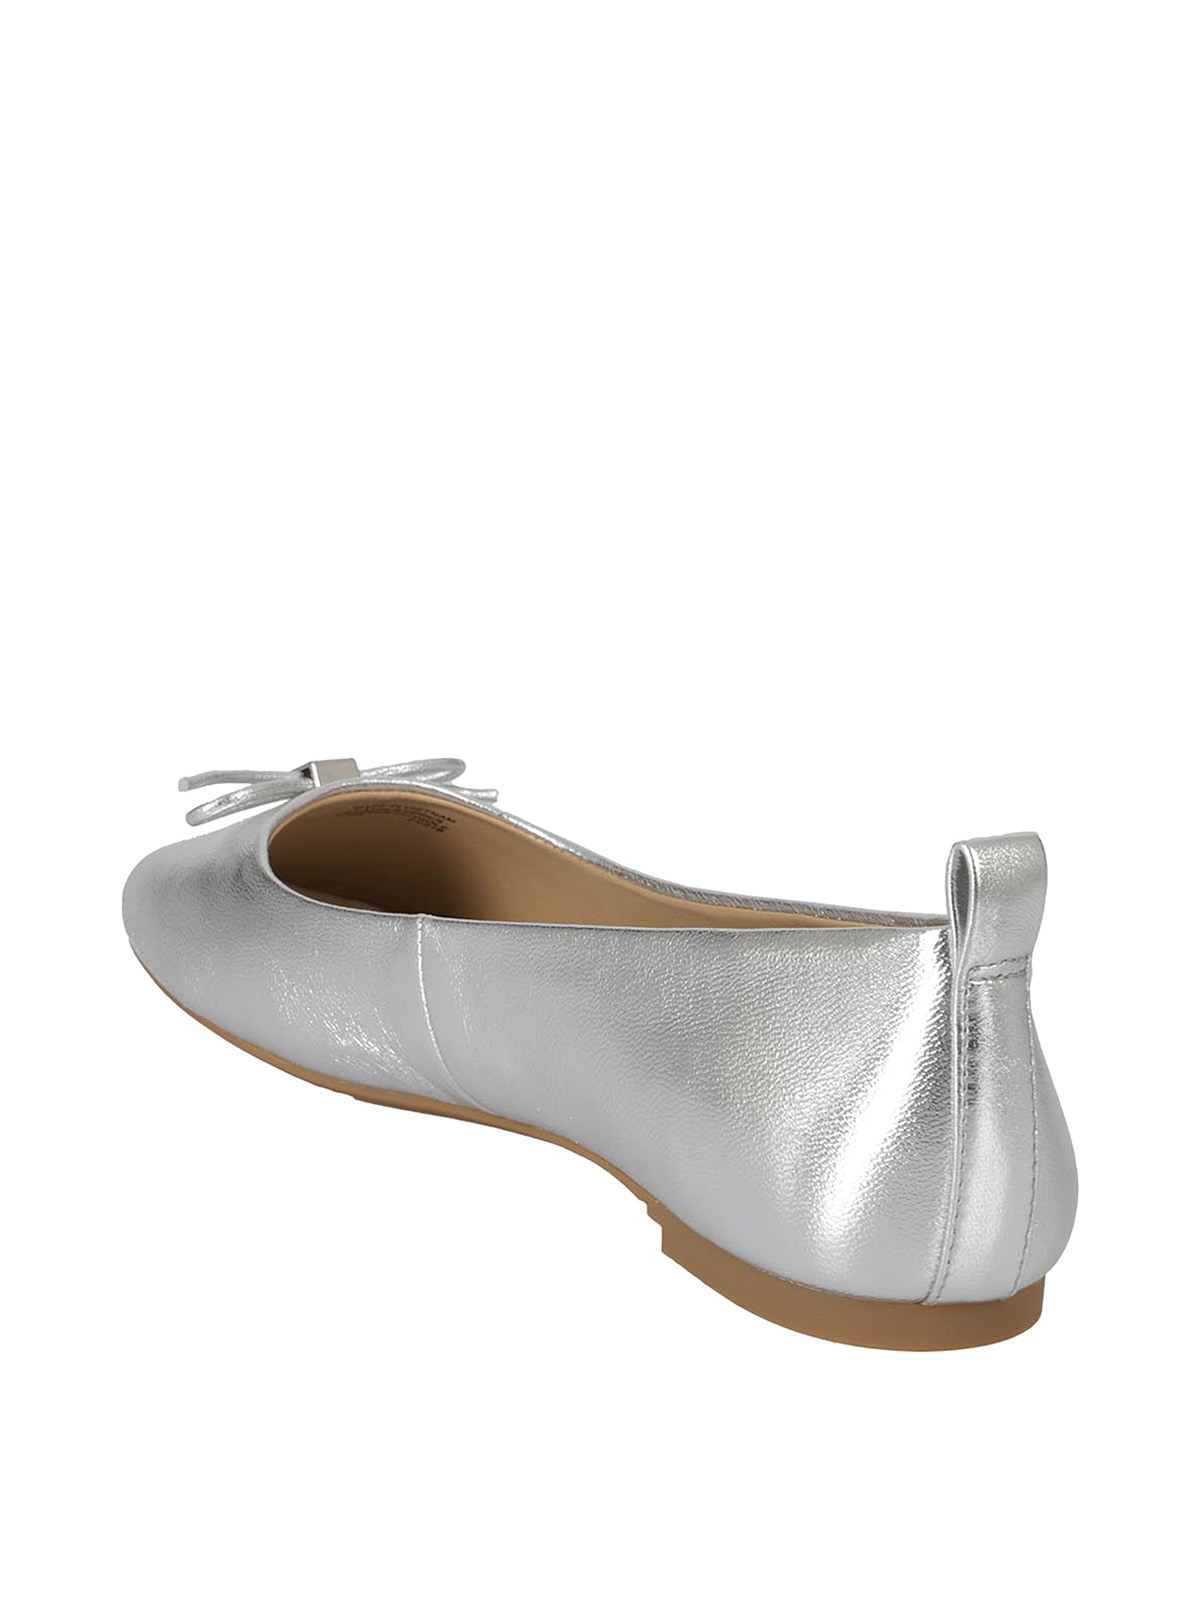 Flat shoes Michael Kors - Silver flats - 40T1ELFP1M040 